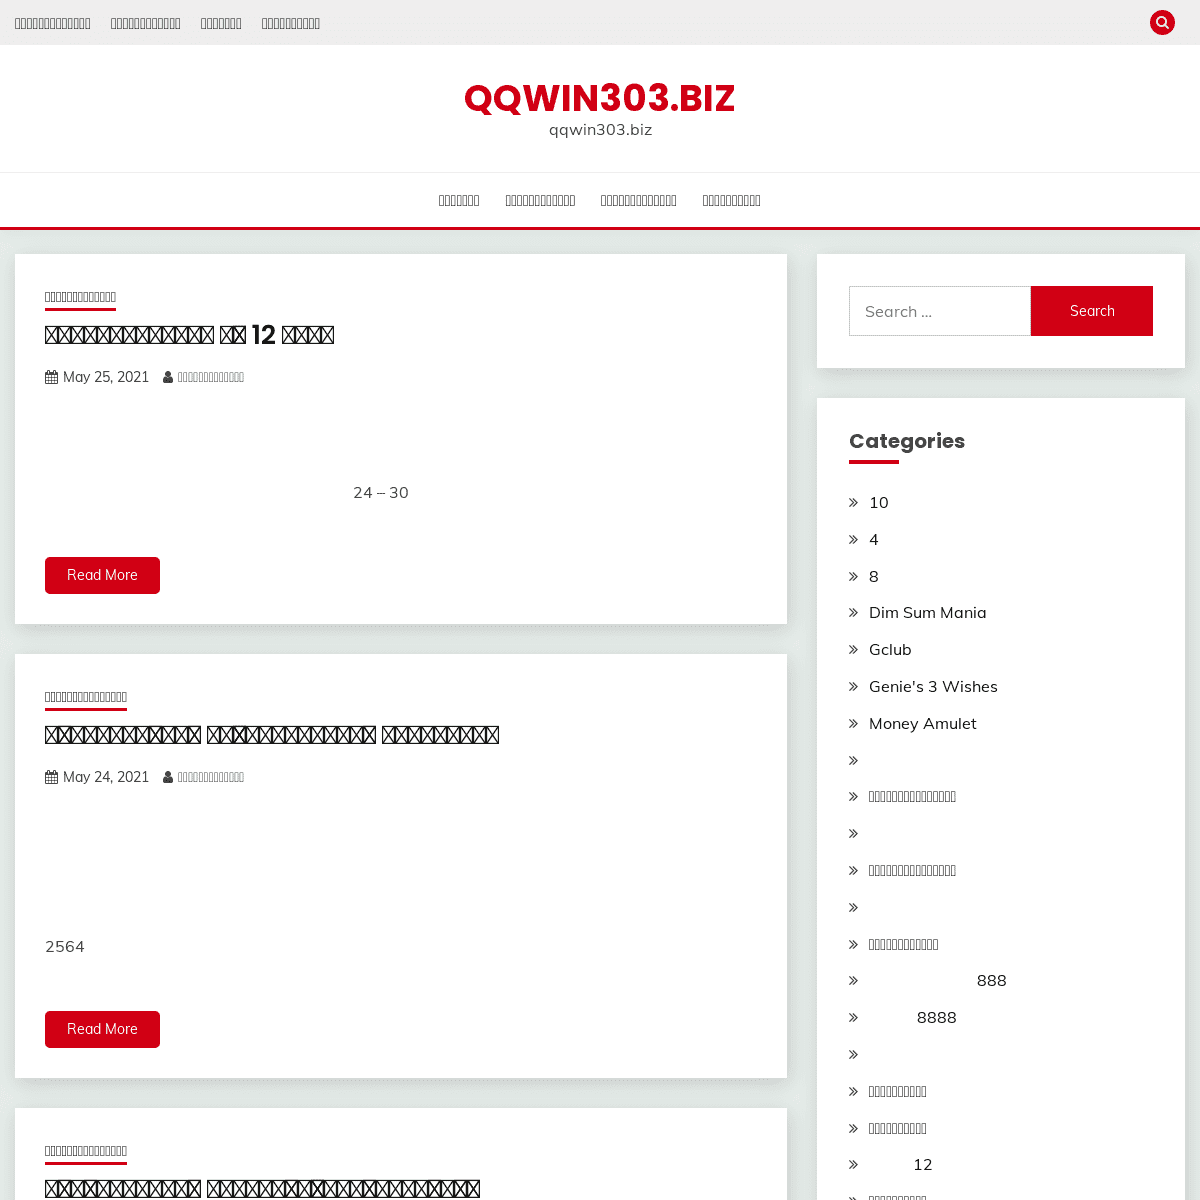 A complete backup of https://qqwin303.biz